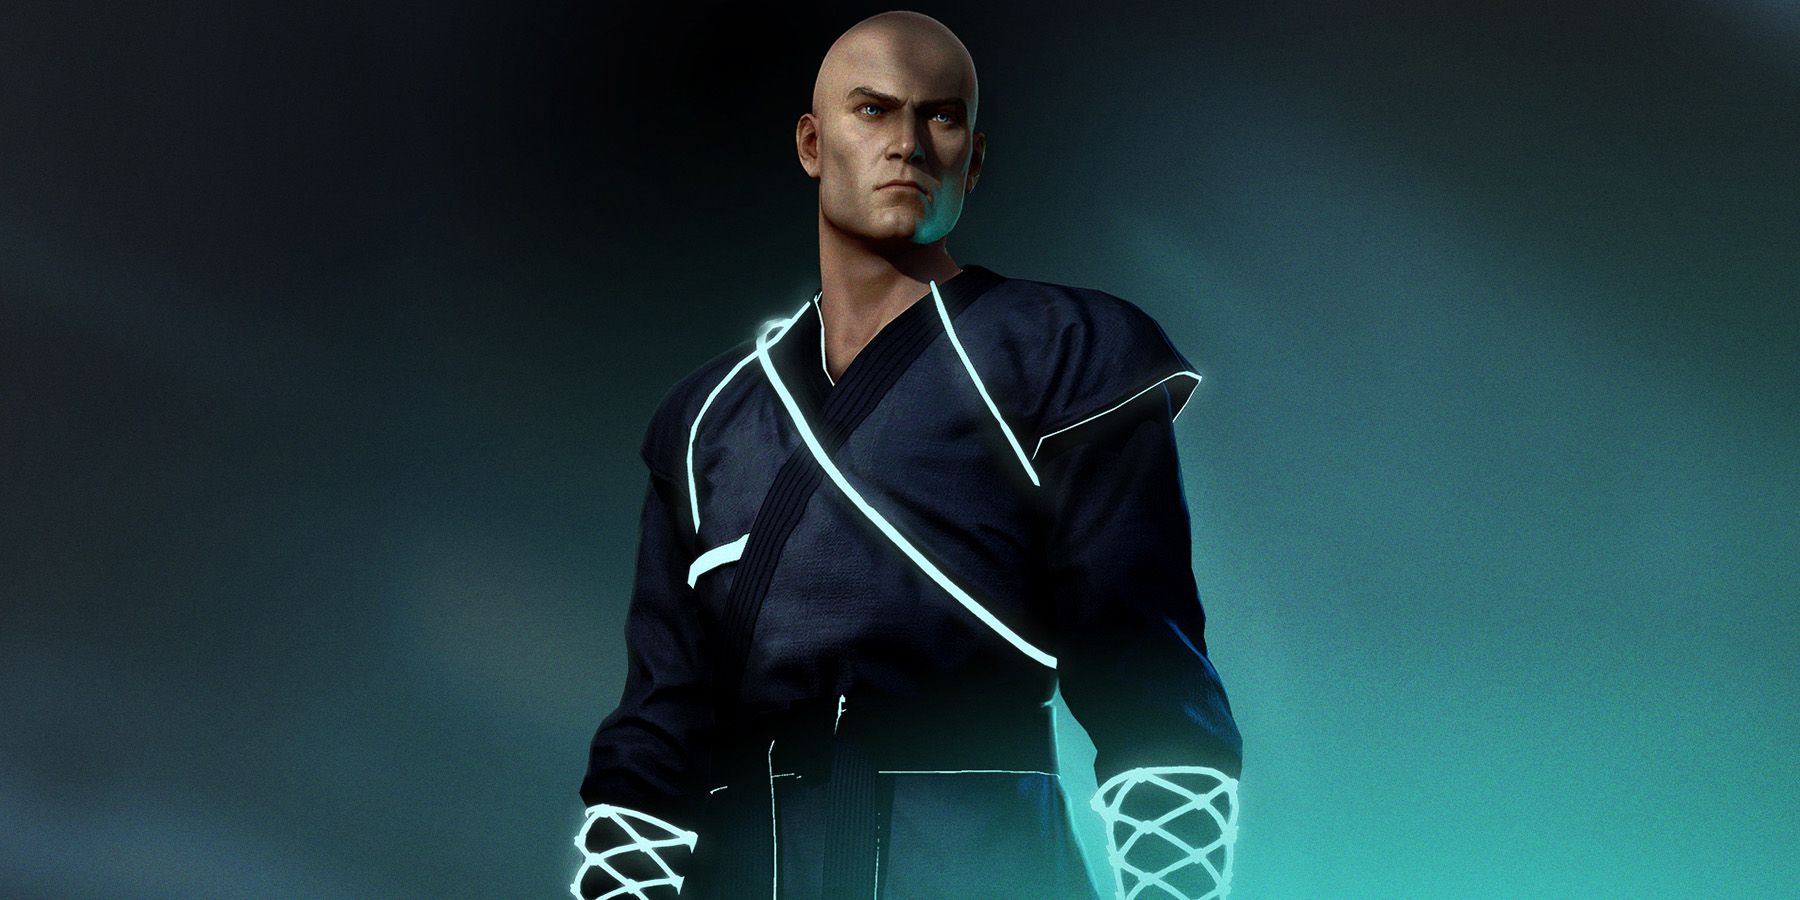 Agent 47 sporting The Neon Ninja Suit from Hitman 3 September 2022 content update.